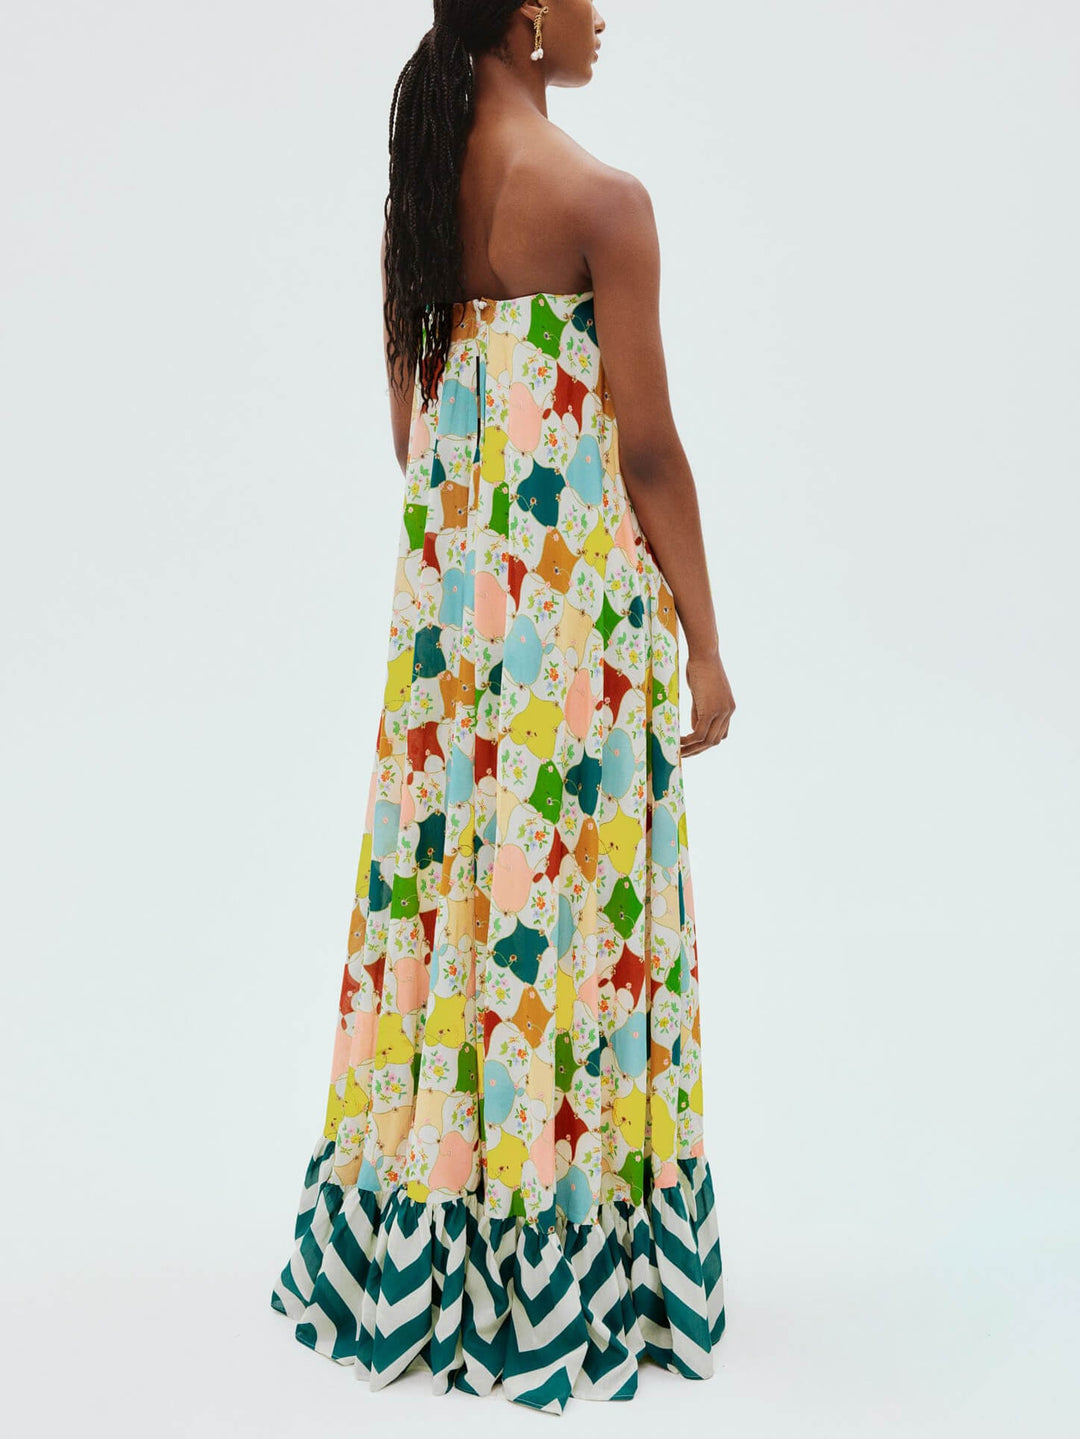 Unique Print Contrast Sleeveless Off-The-Shoulder Maxi Dress